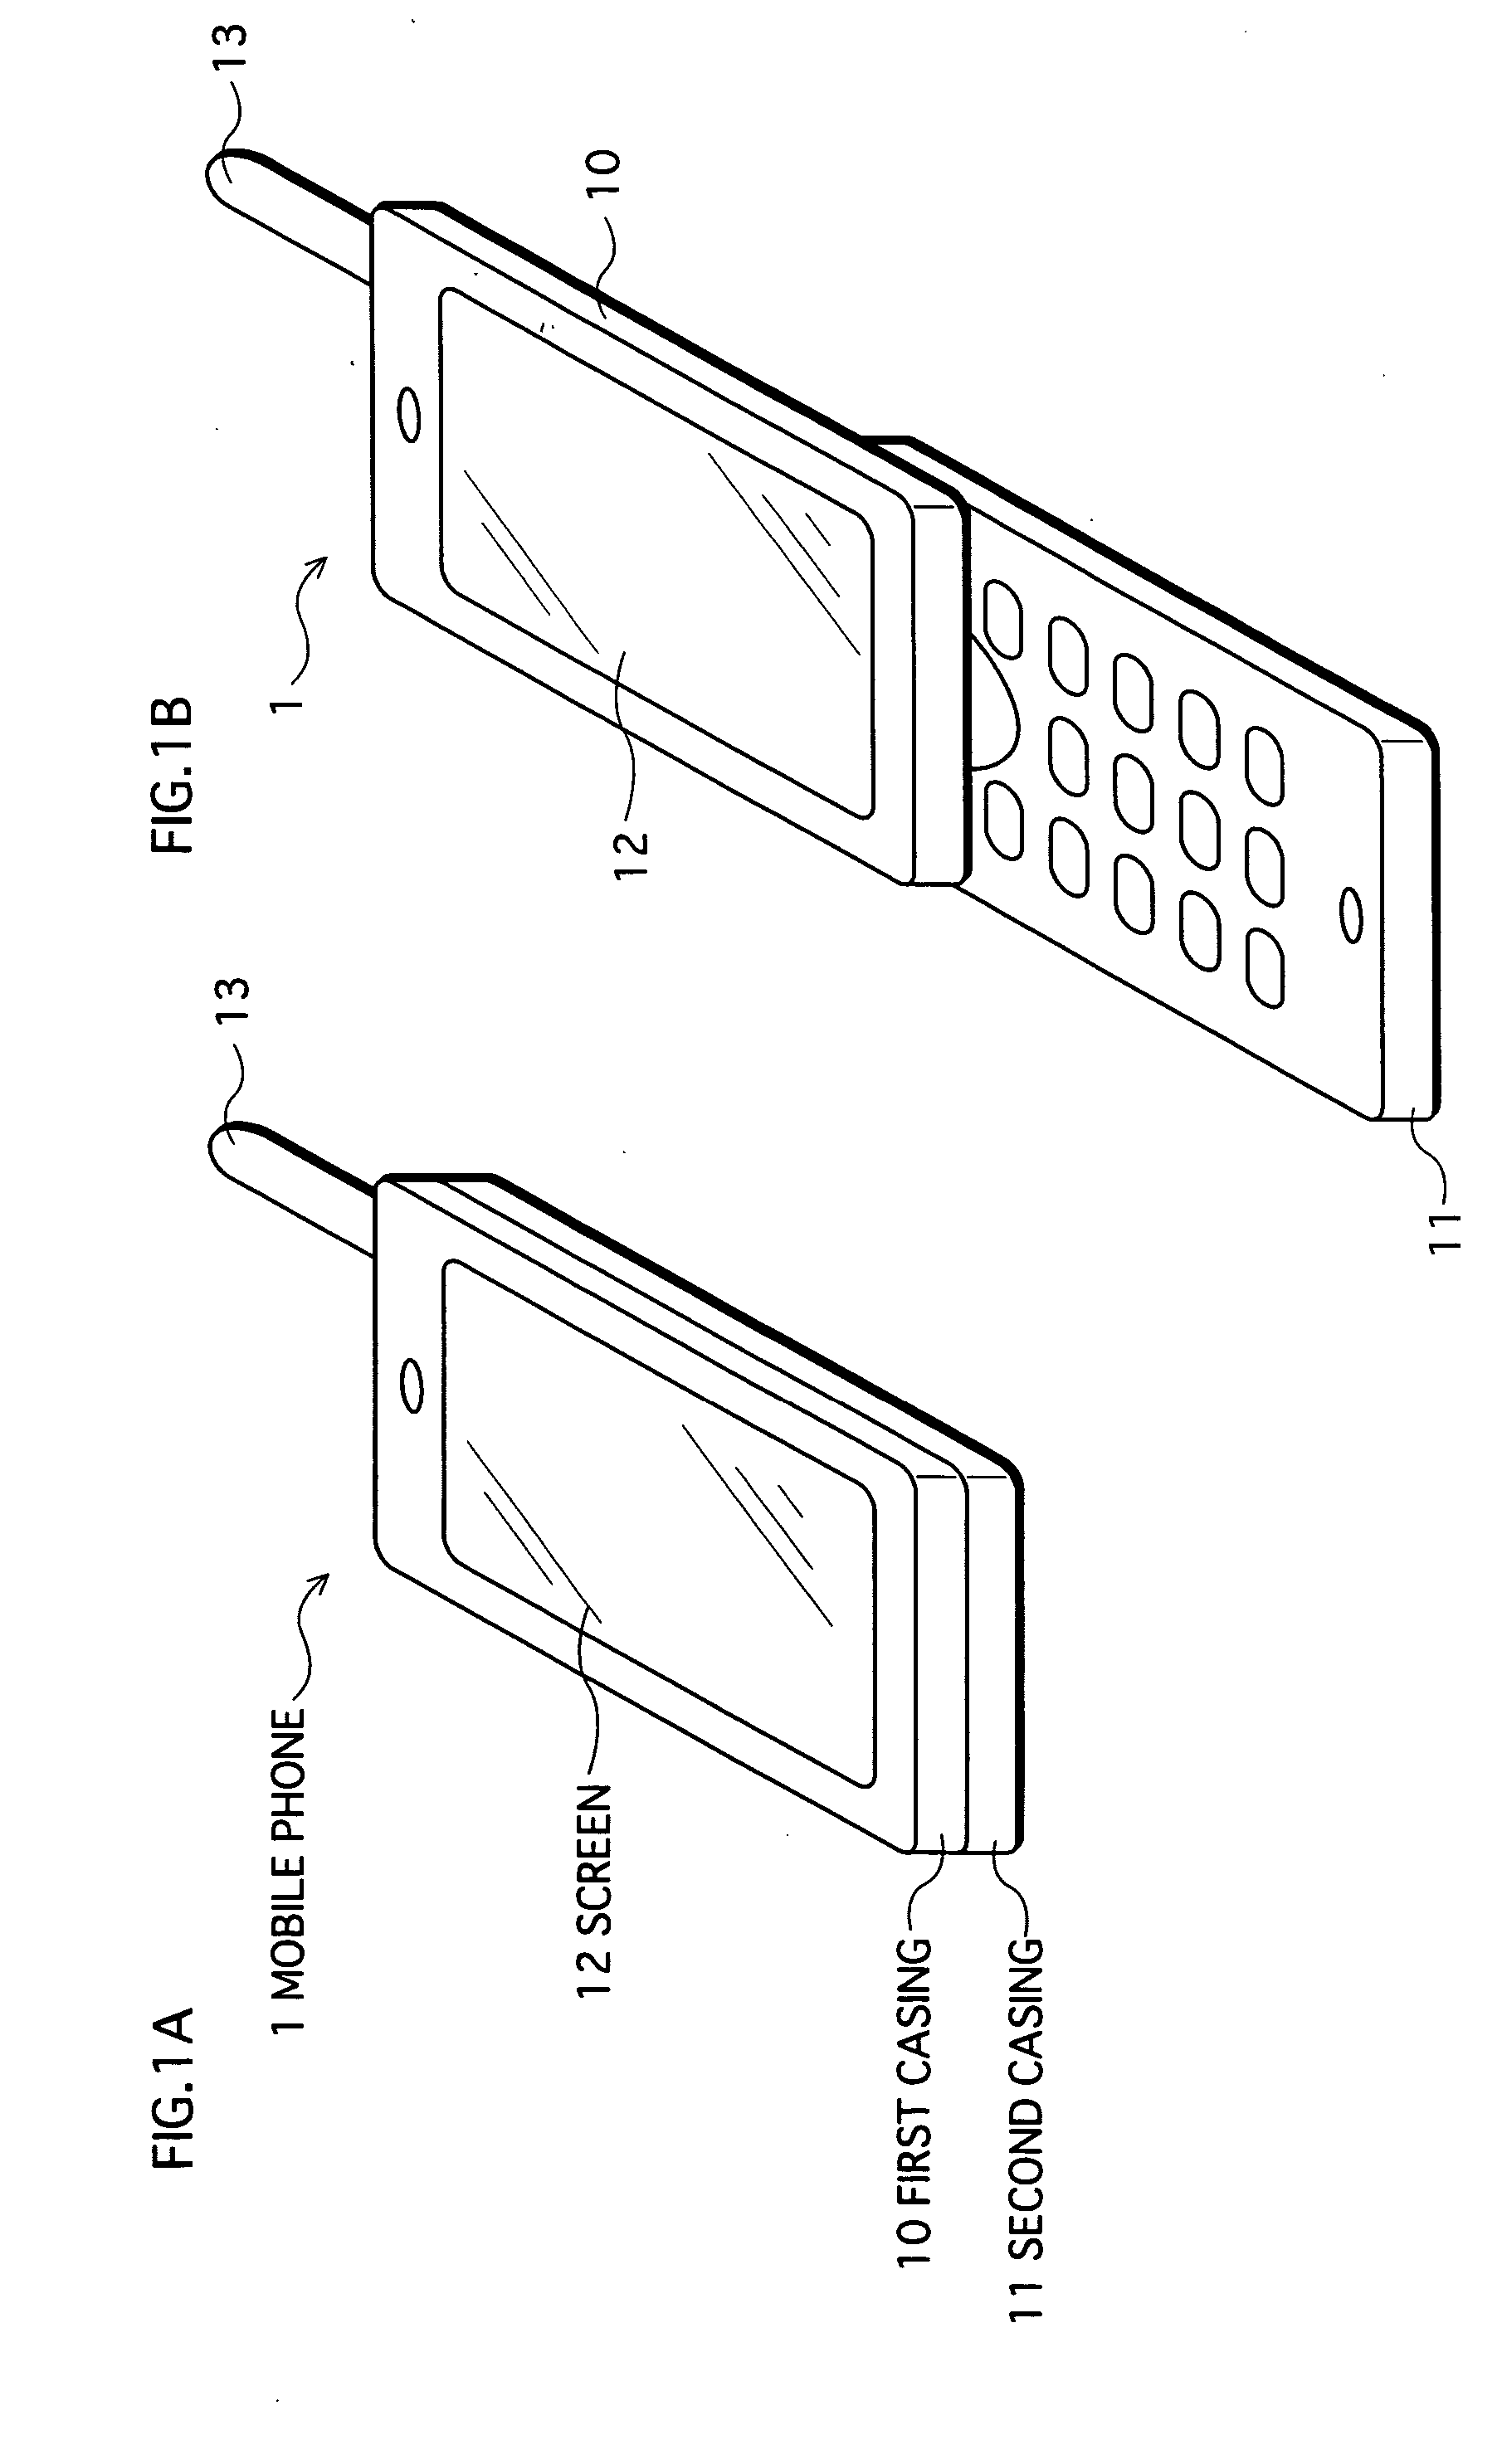 Mobile Phone, Display Method, and Computer Program